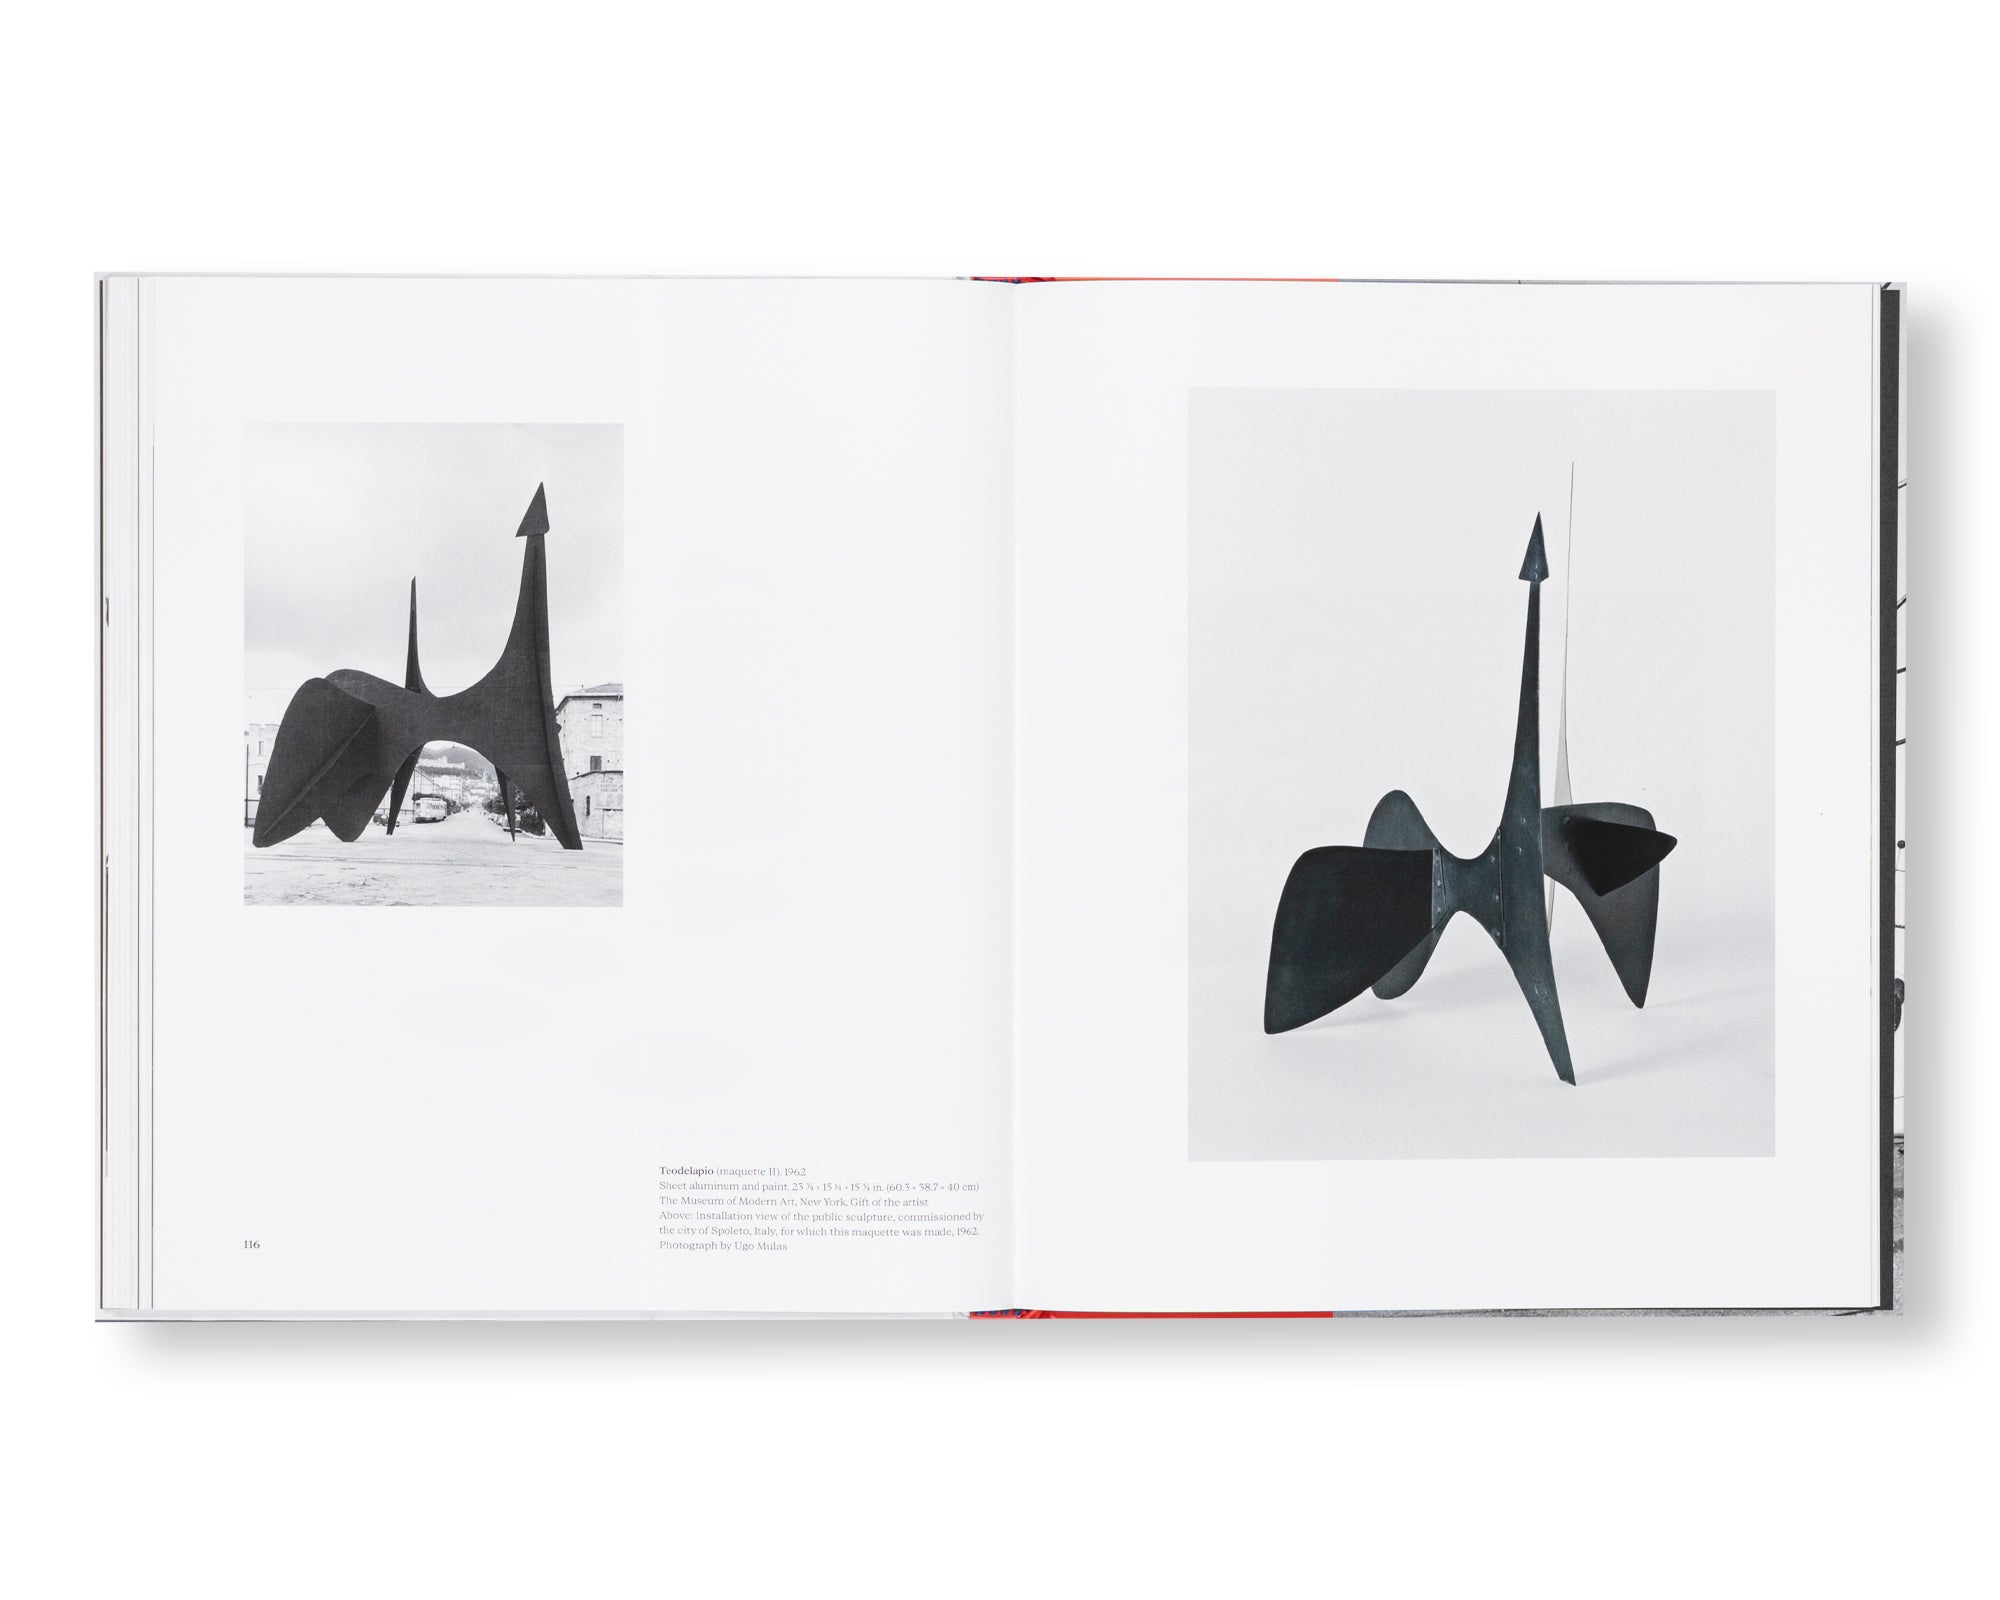 MODERN FROM THE START by Alexander Calder